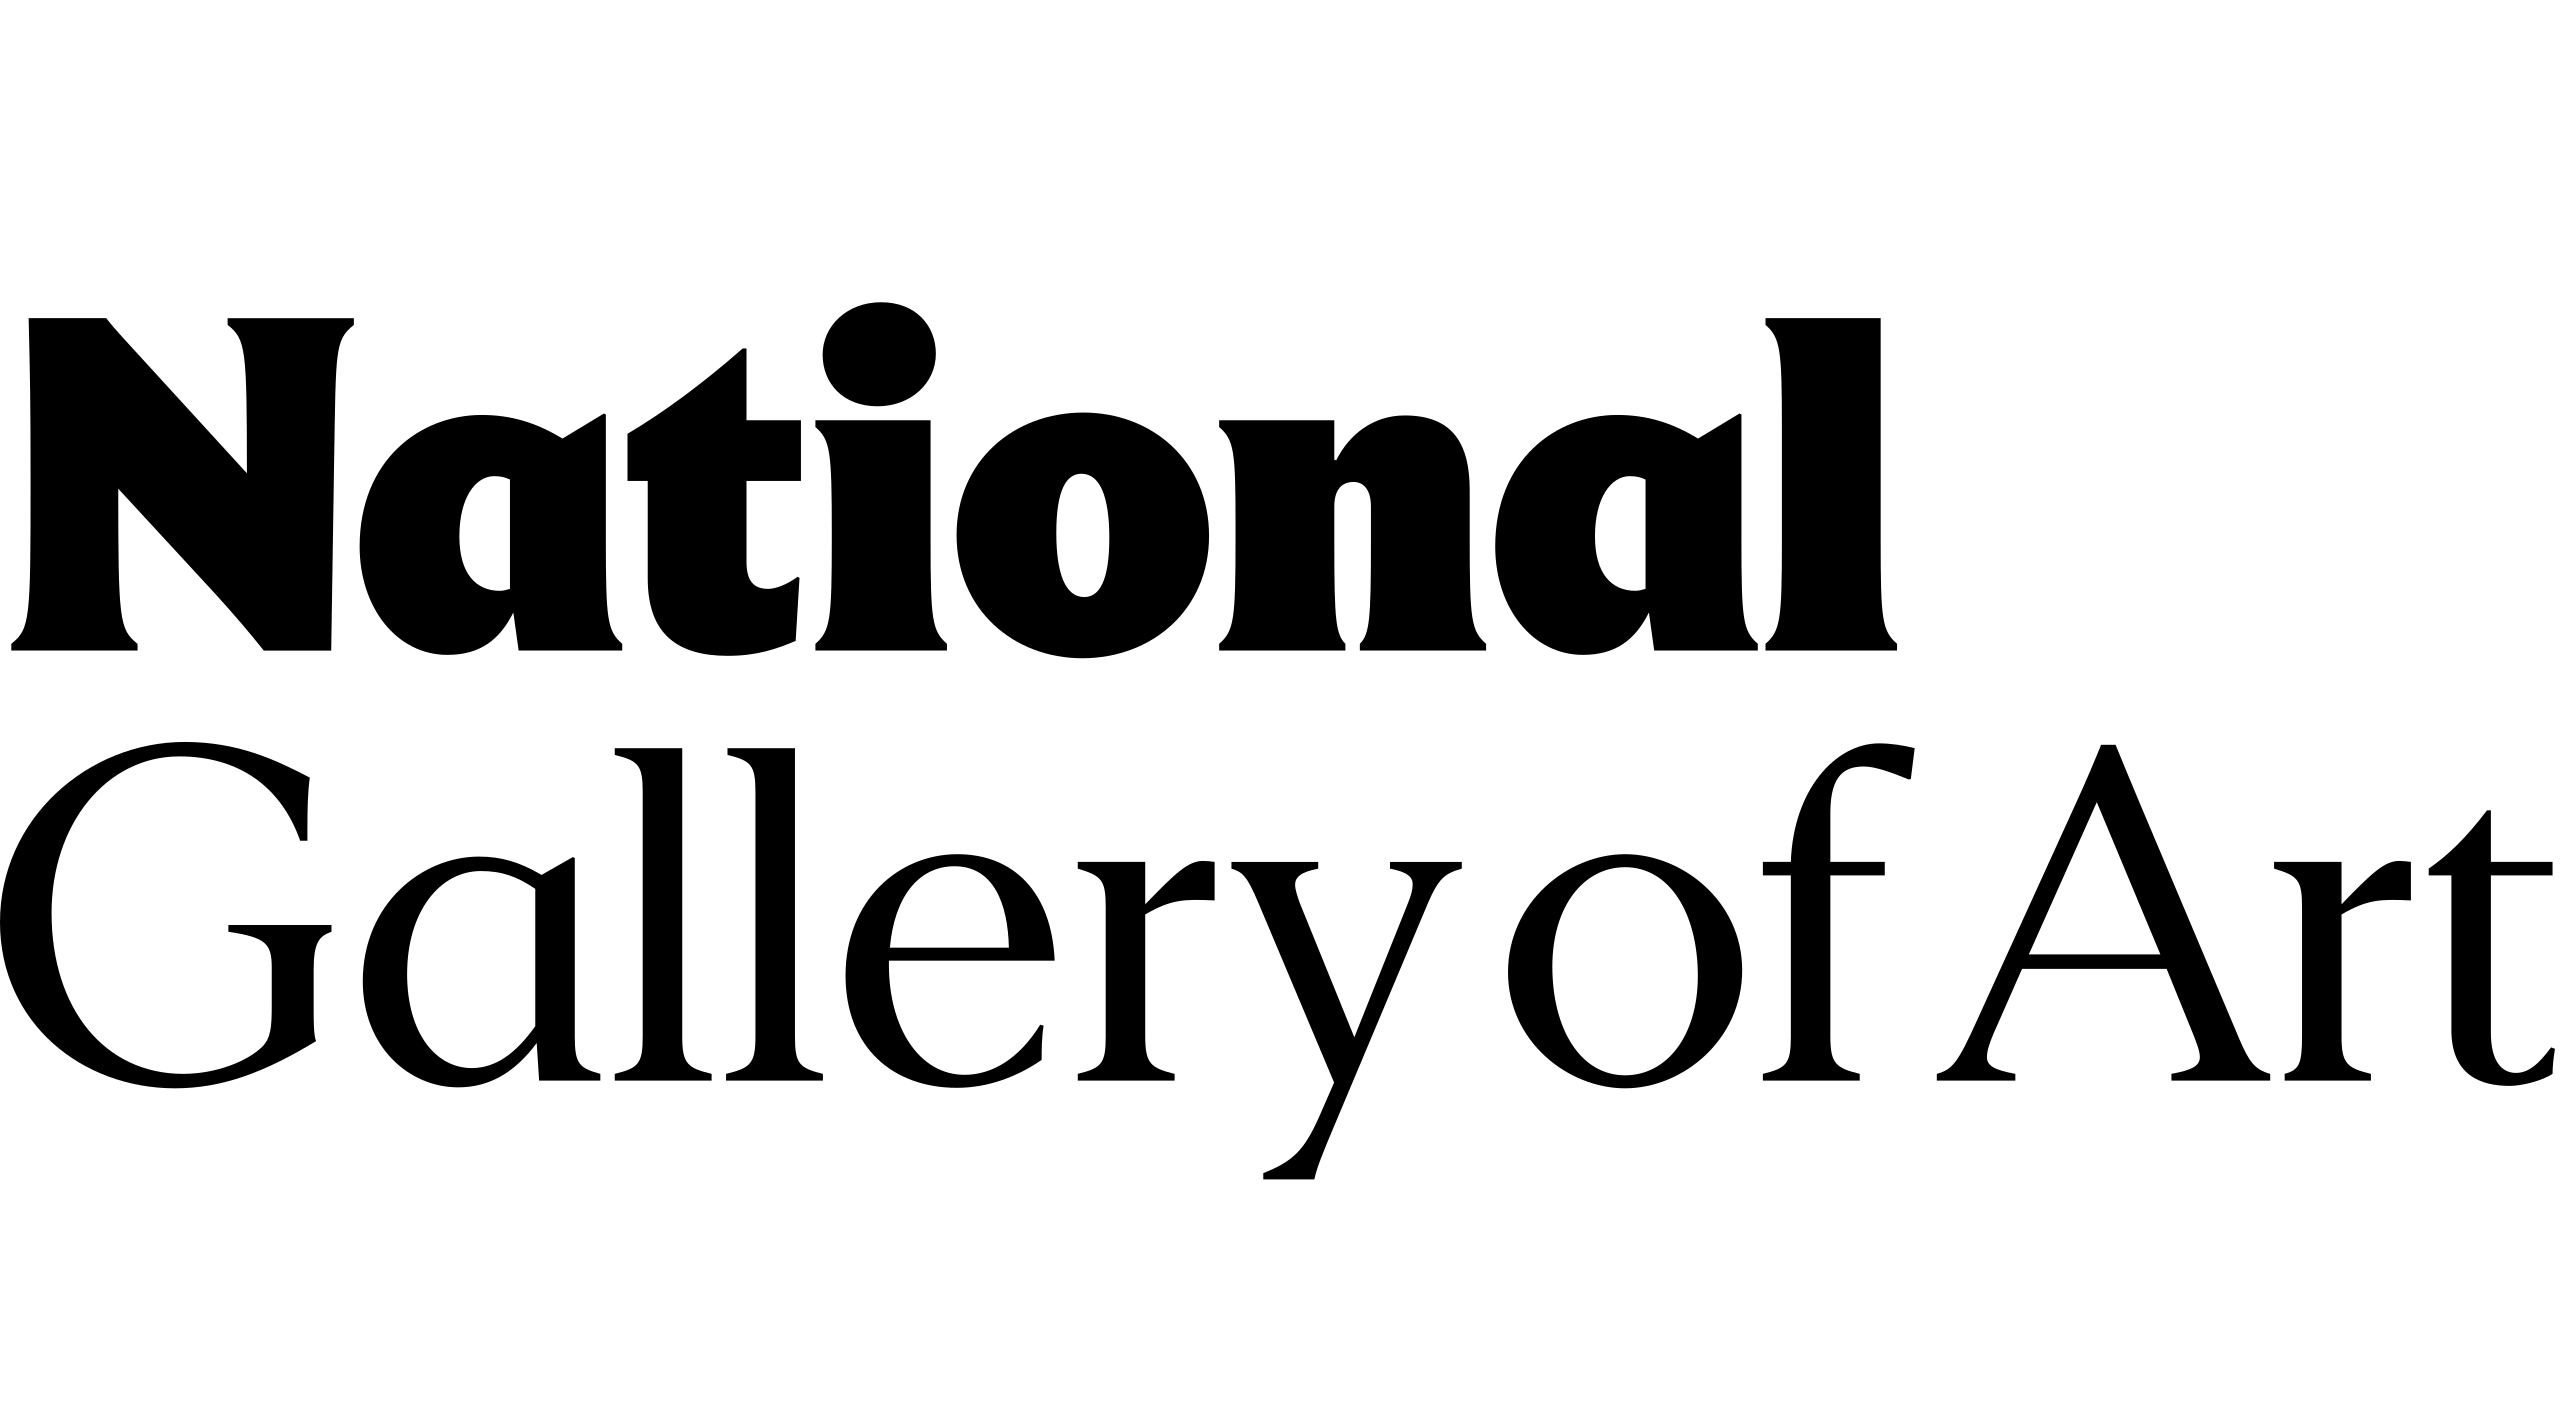 National Gallery of Art Publishing Office logo